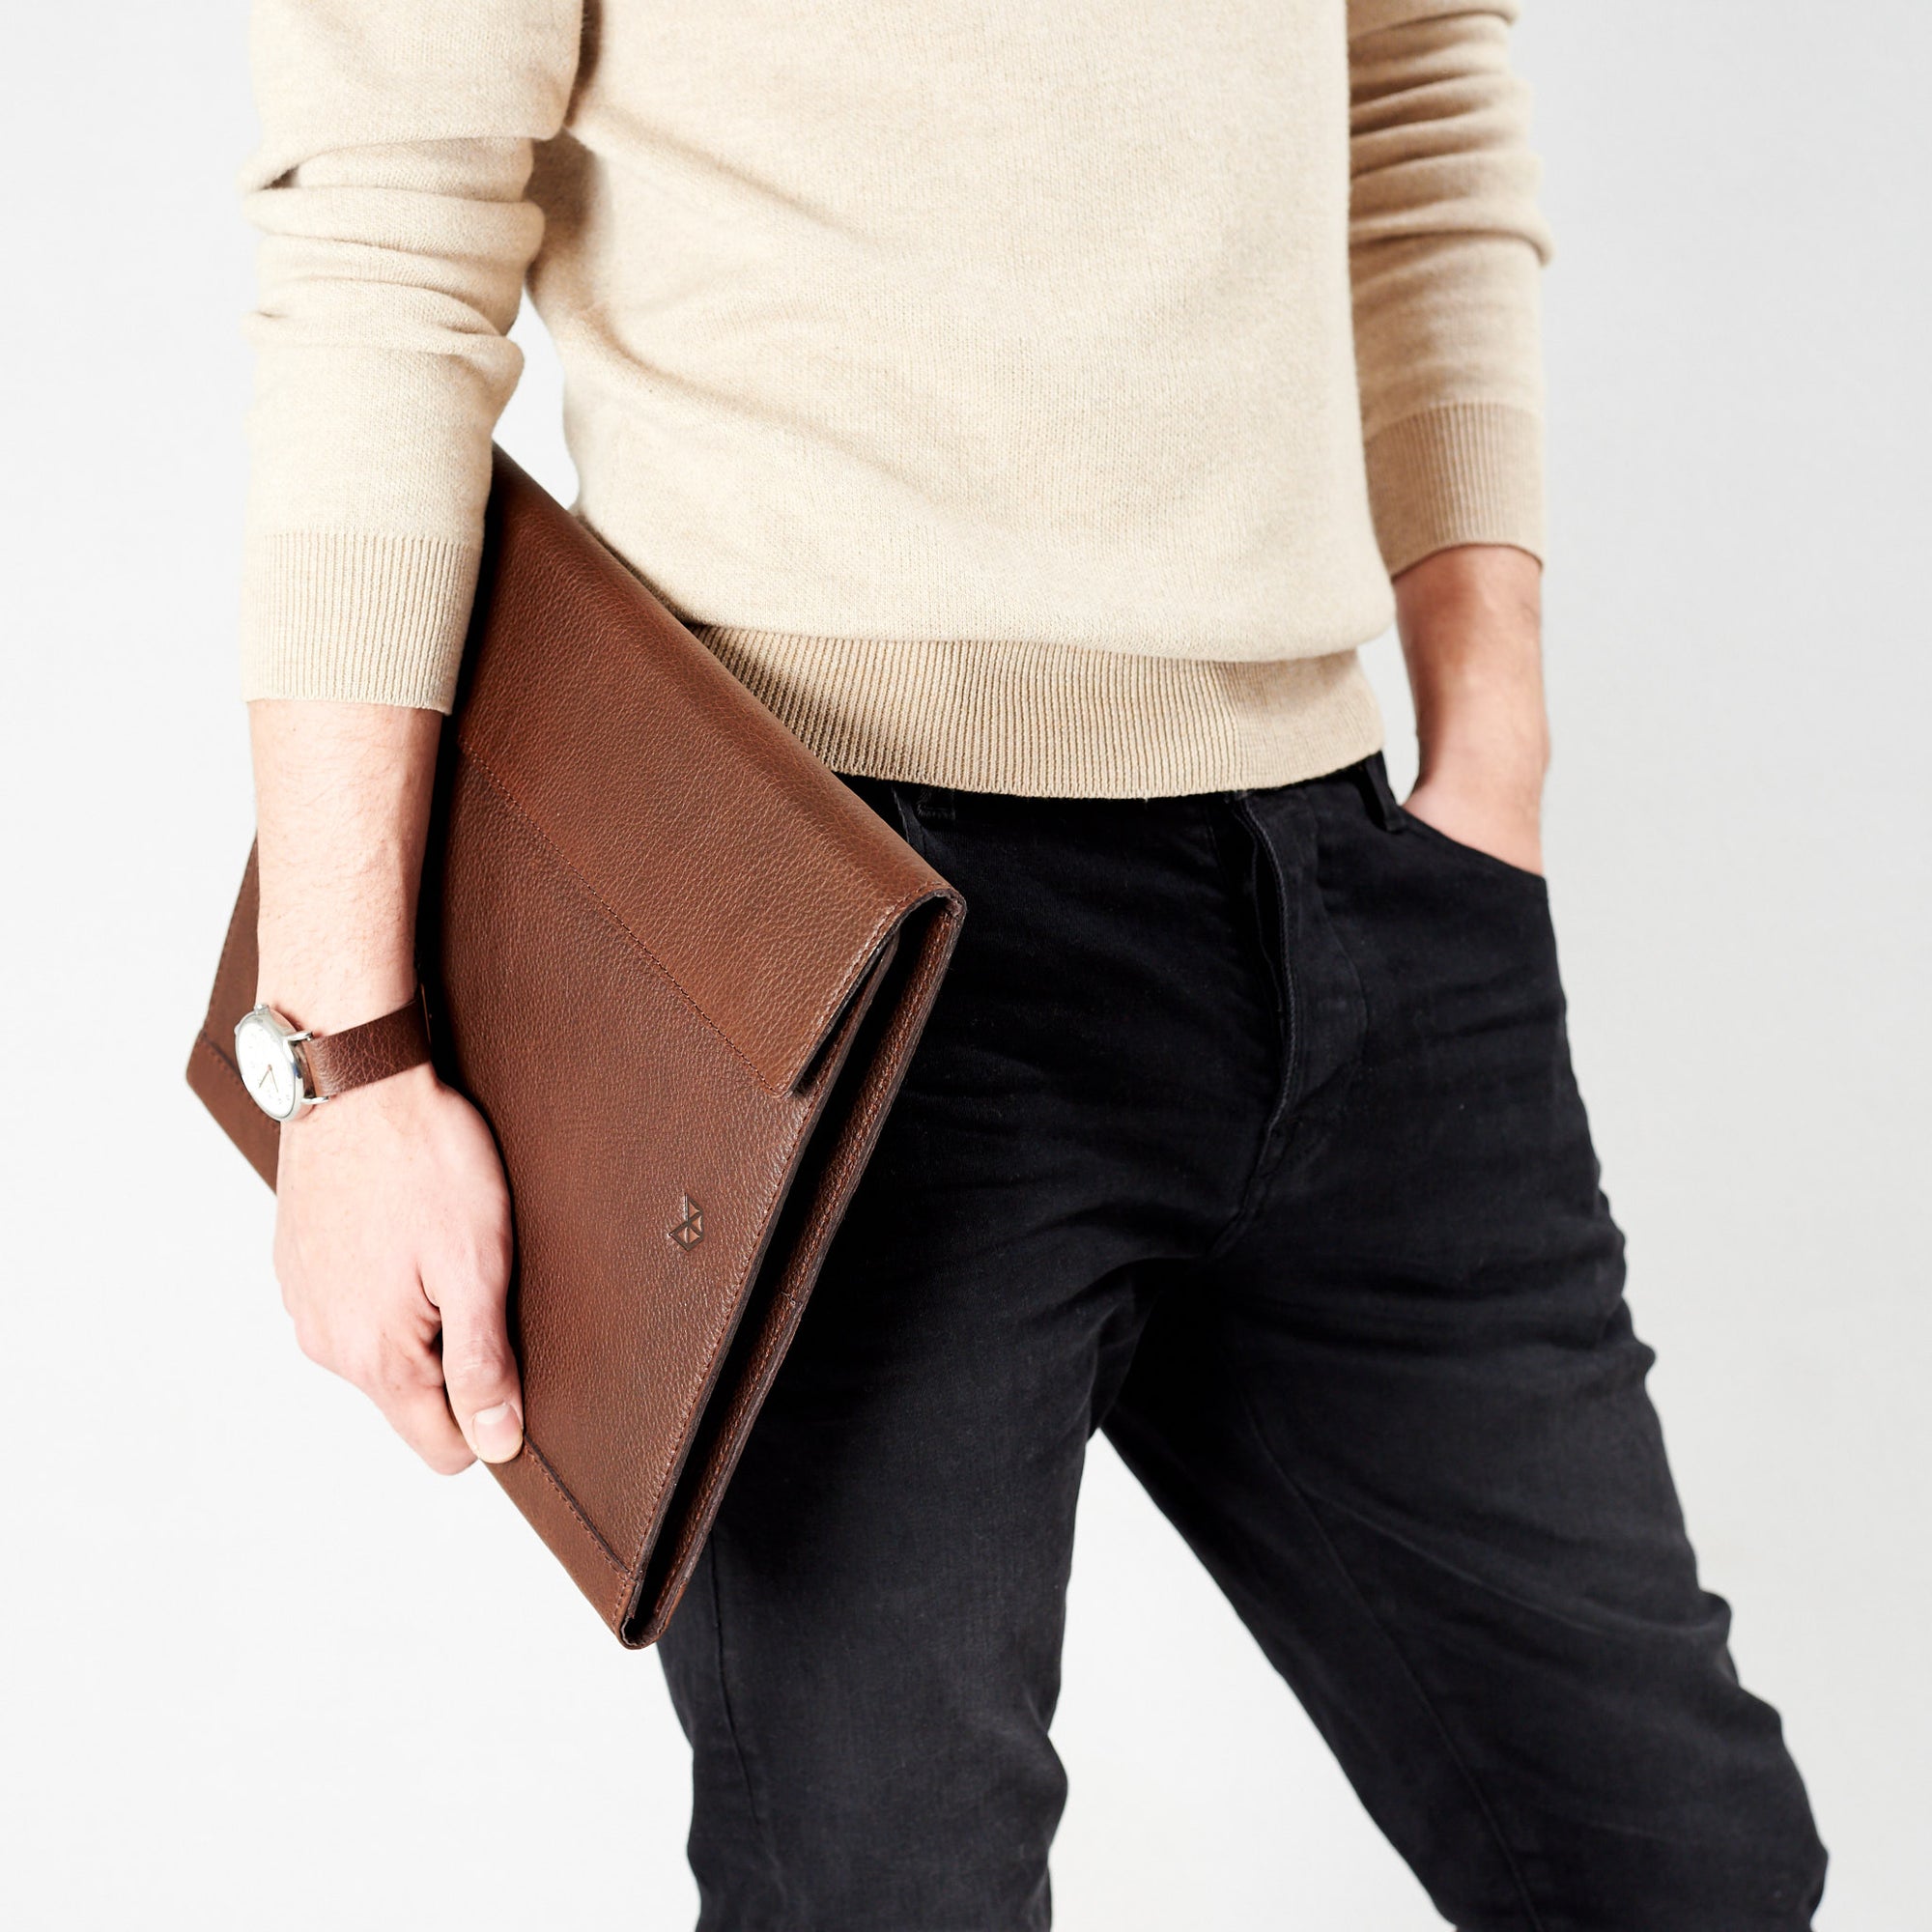 Style model walking with portfolio. Brown Laptop Tablet Portfolio. Business Document Organizer for Men by Capra Leather